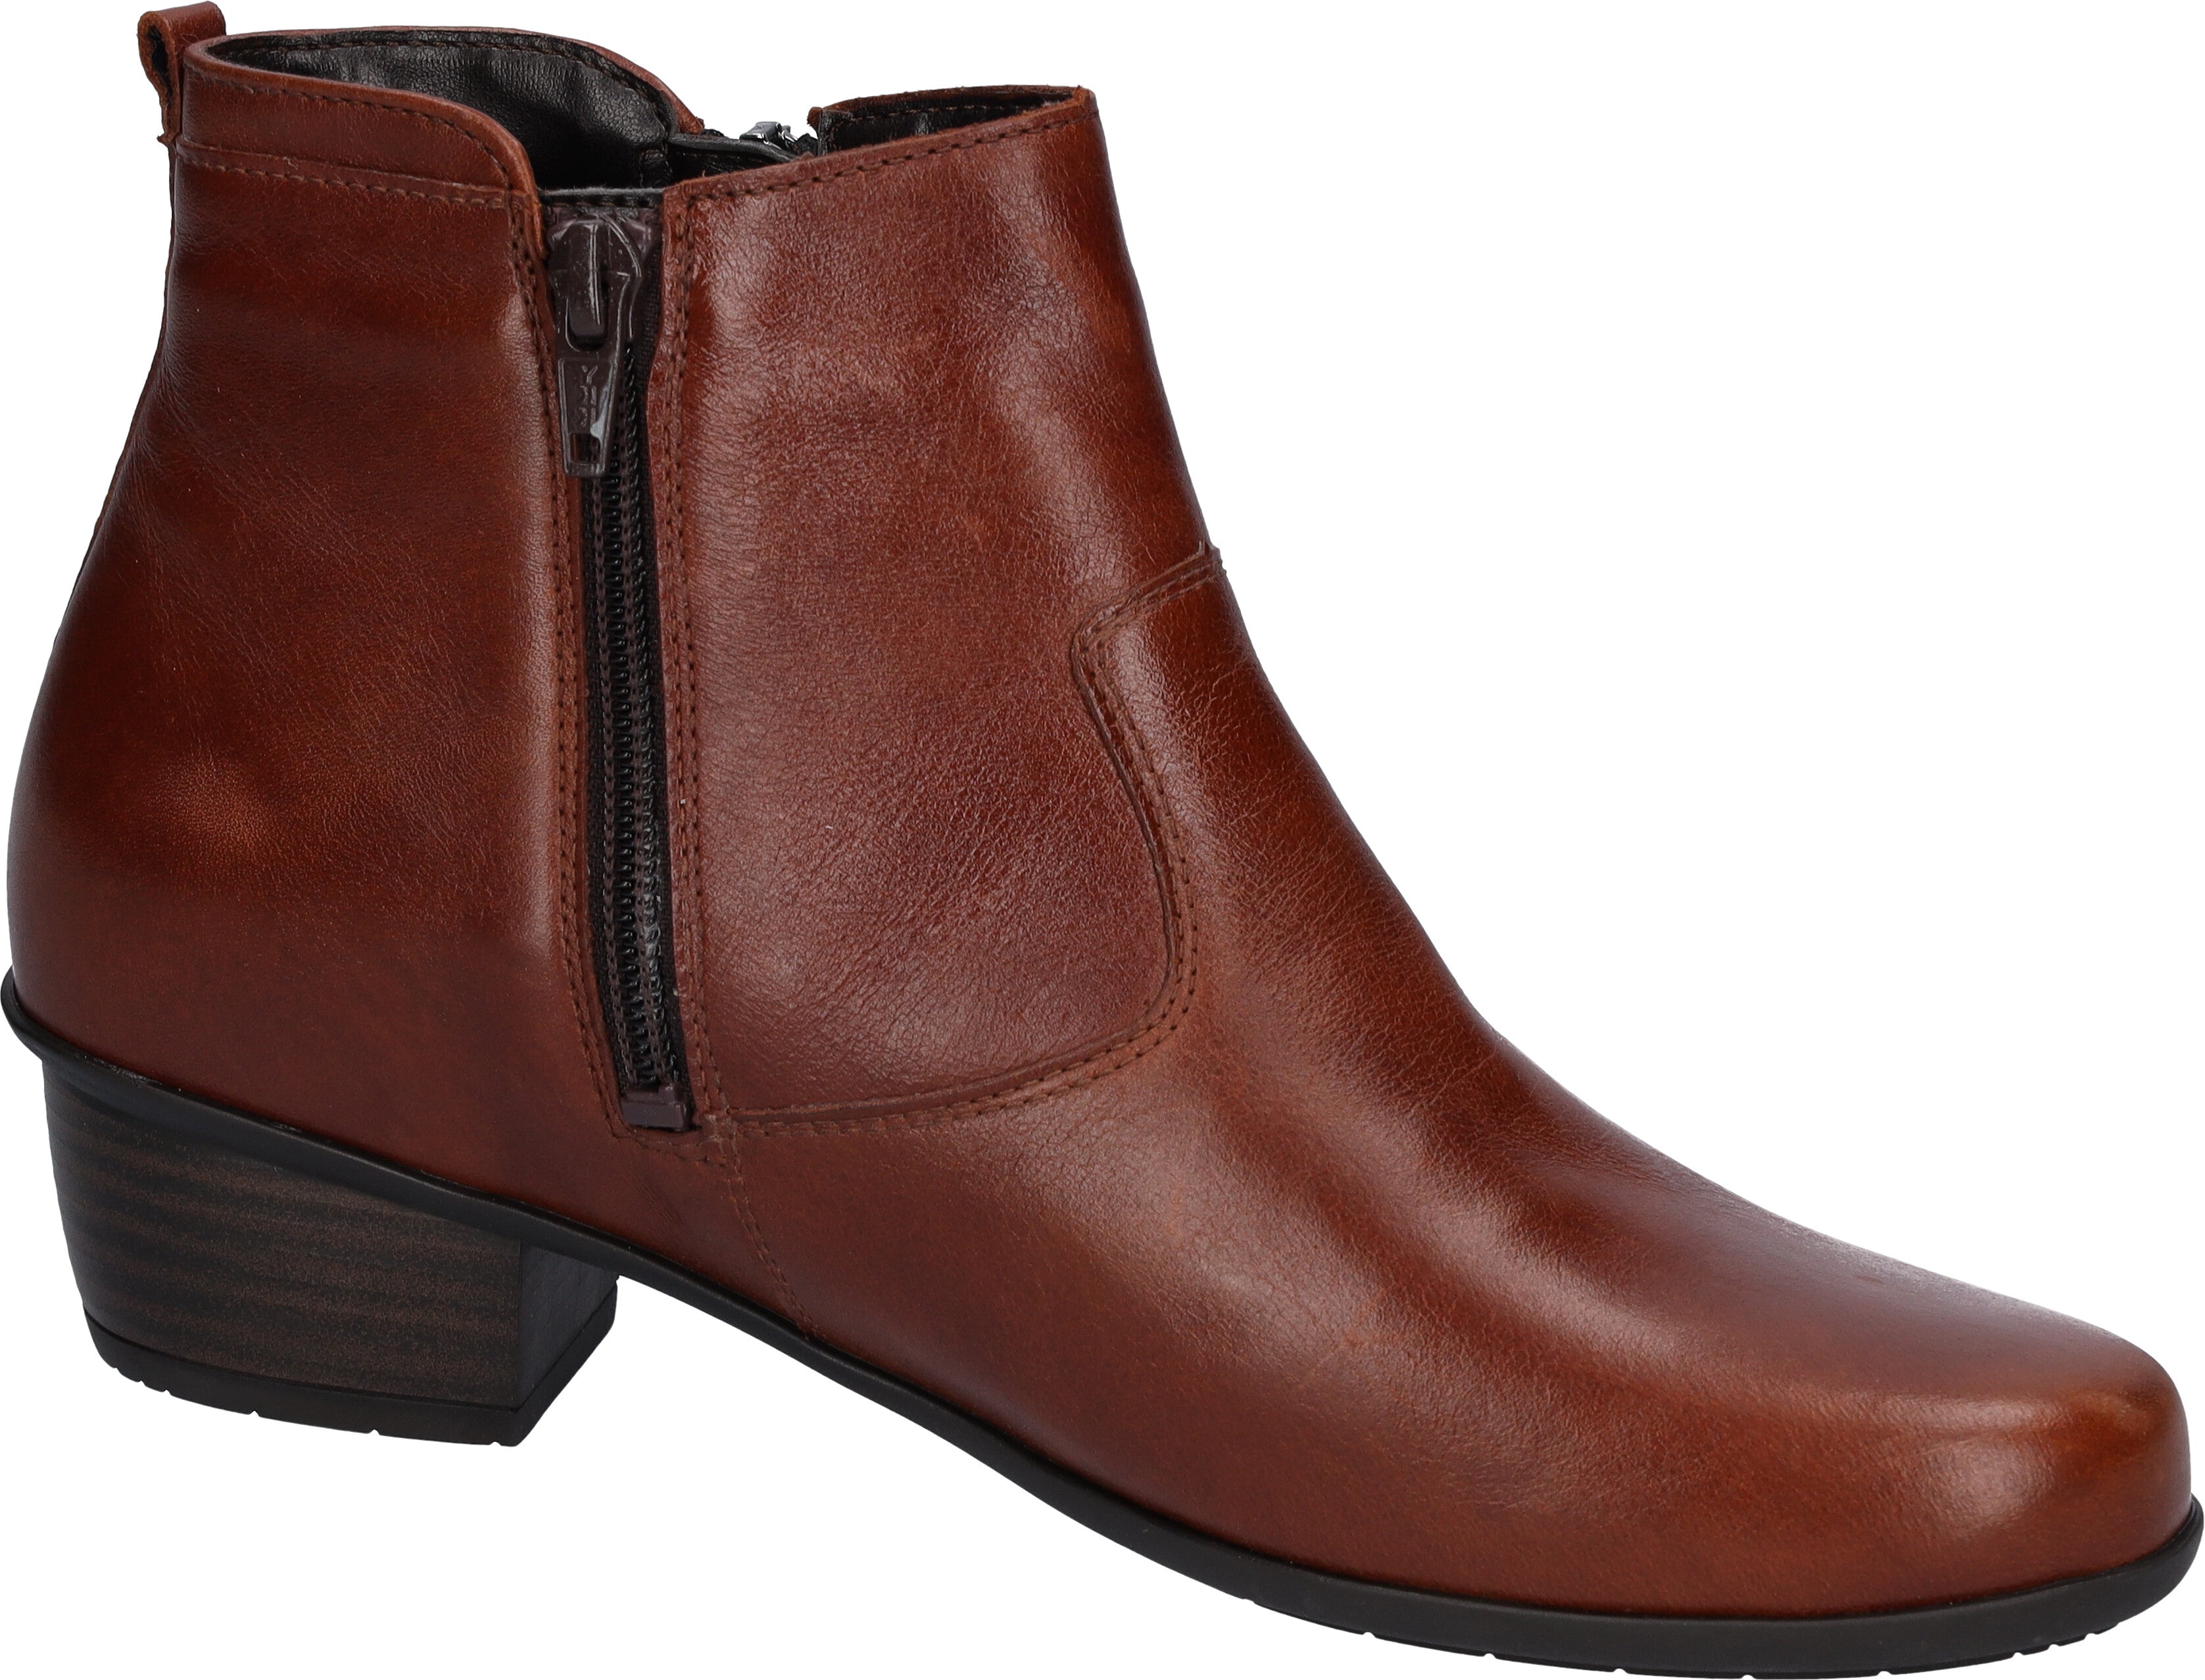 Waldlaufer 967803 124 082 Haifi Ladies Brown Leather Twin Zip Ankle Boots